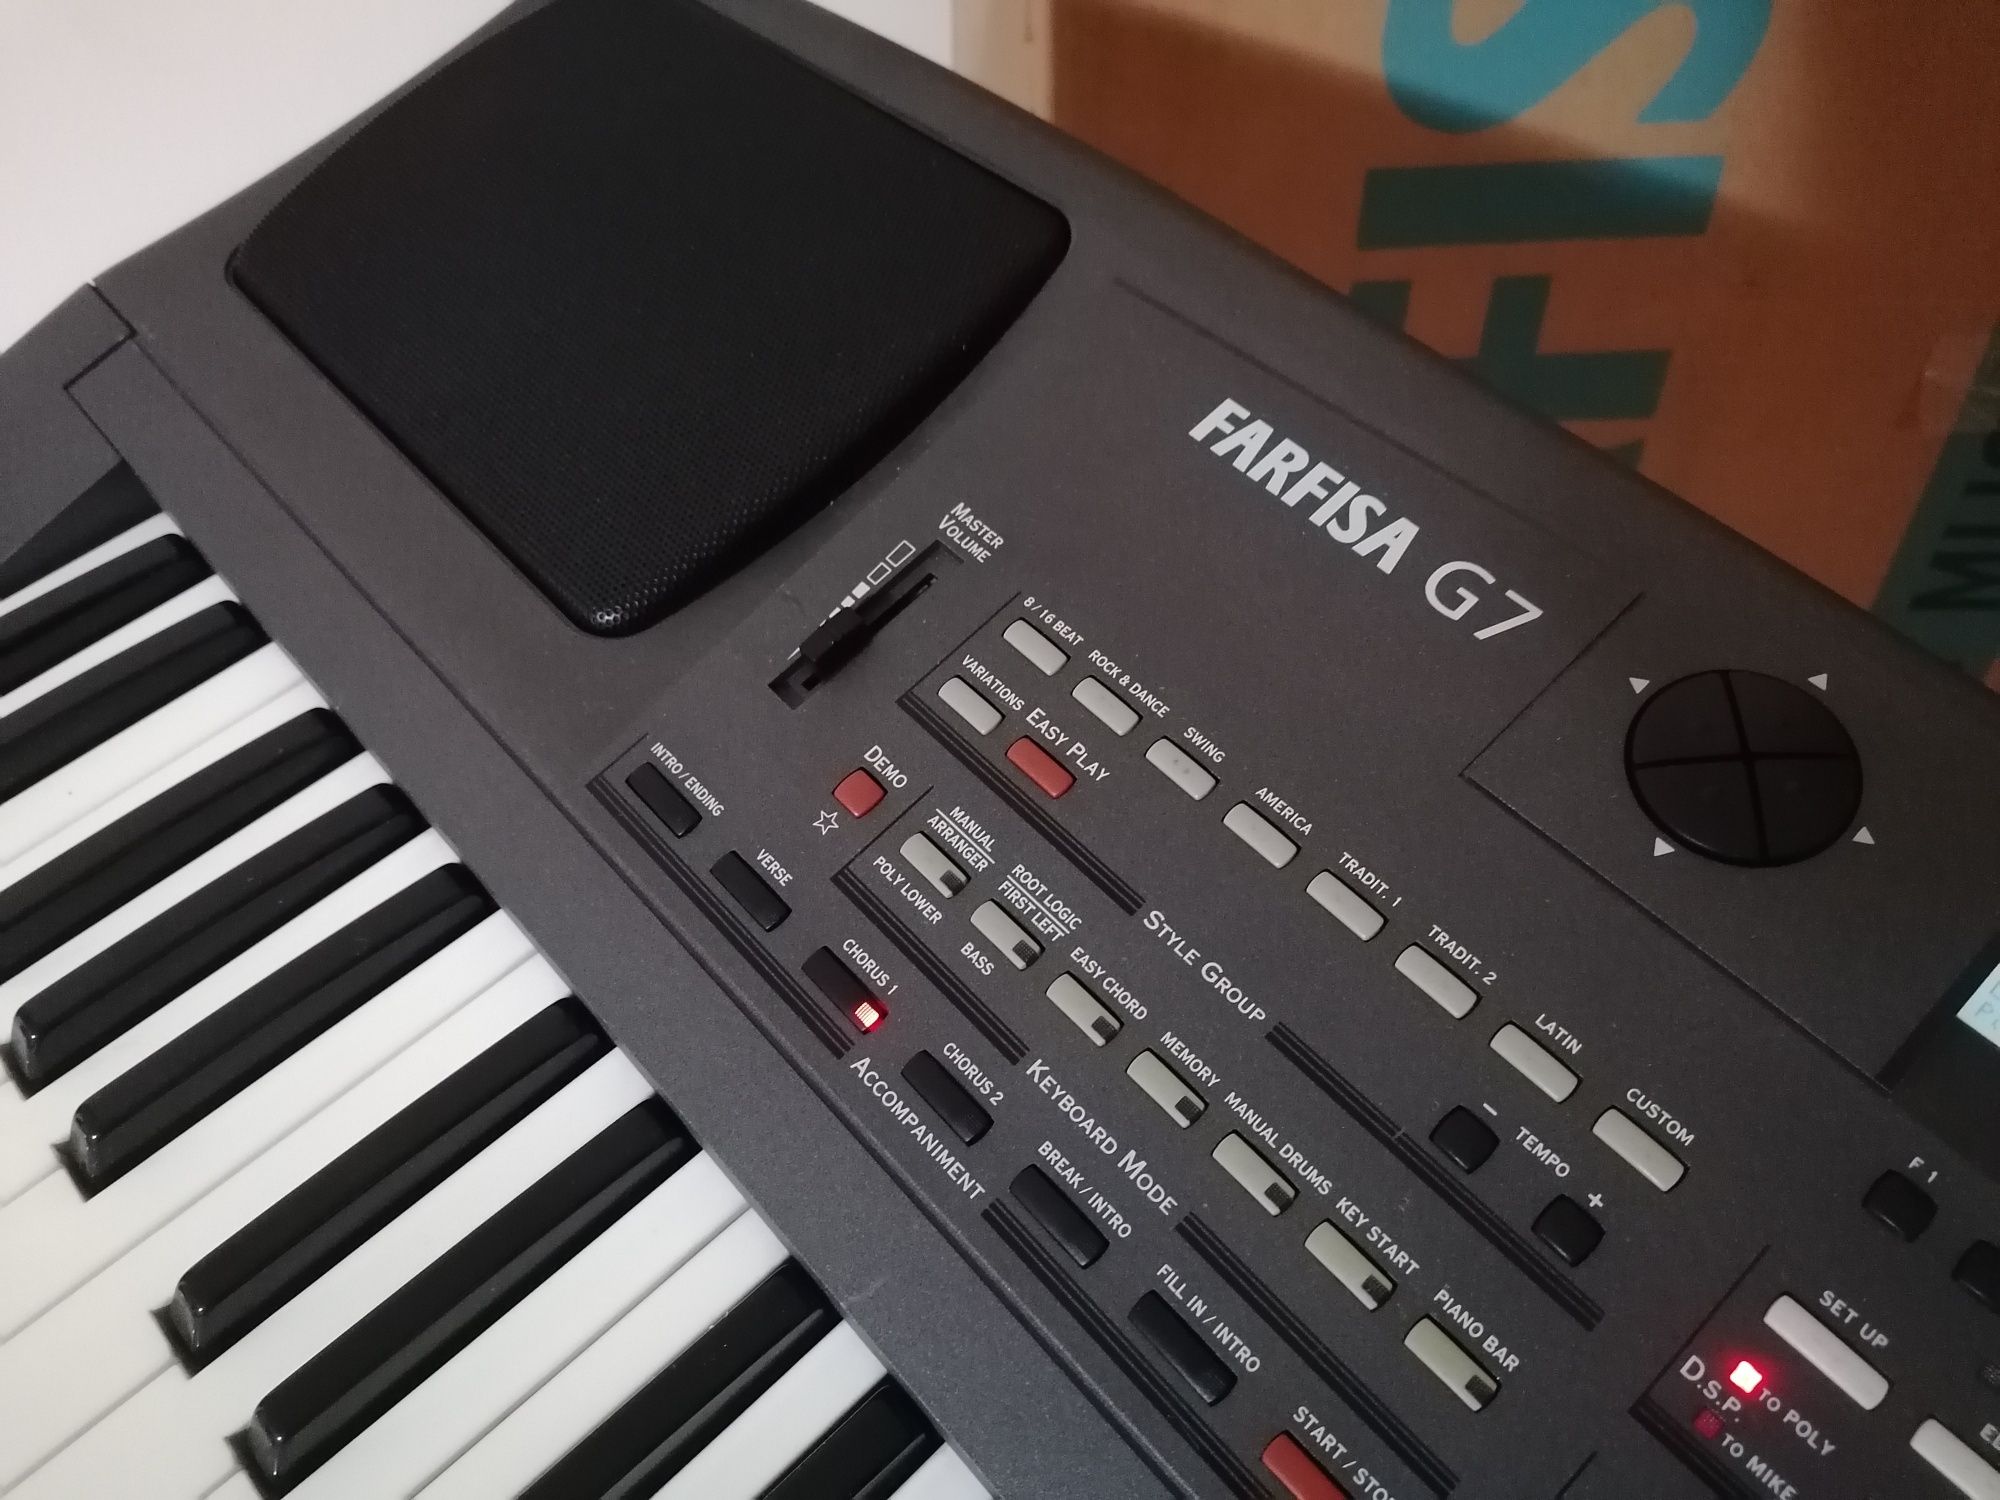 FARFISA G-7 Floppy sintetizator profesional orga pian